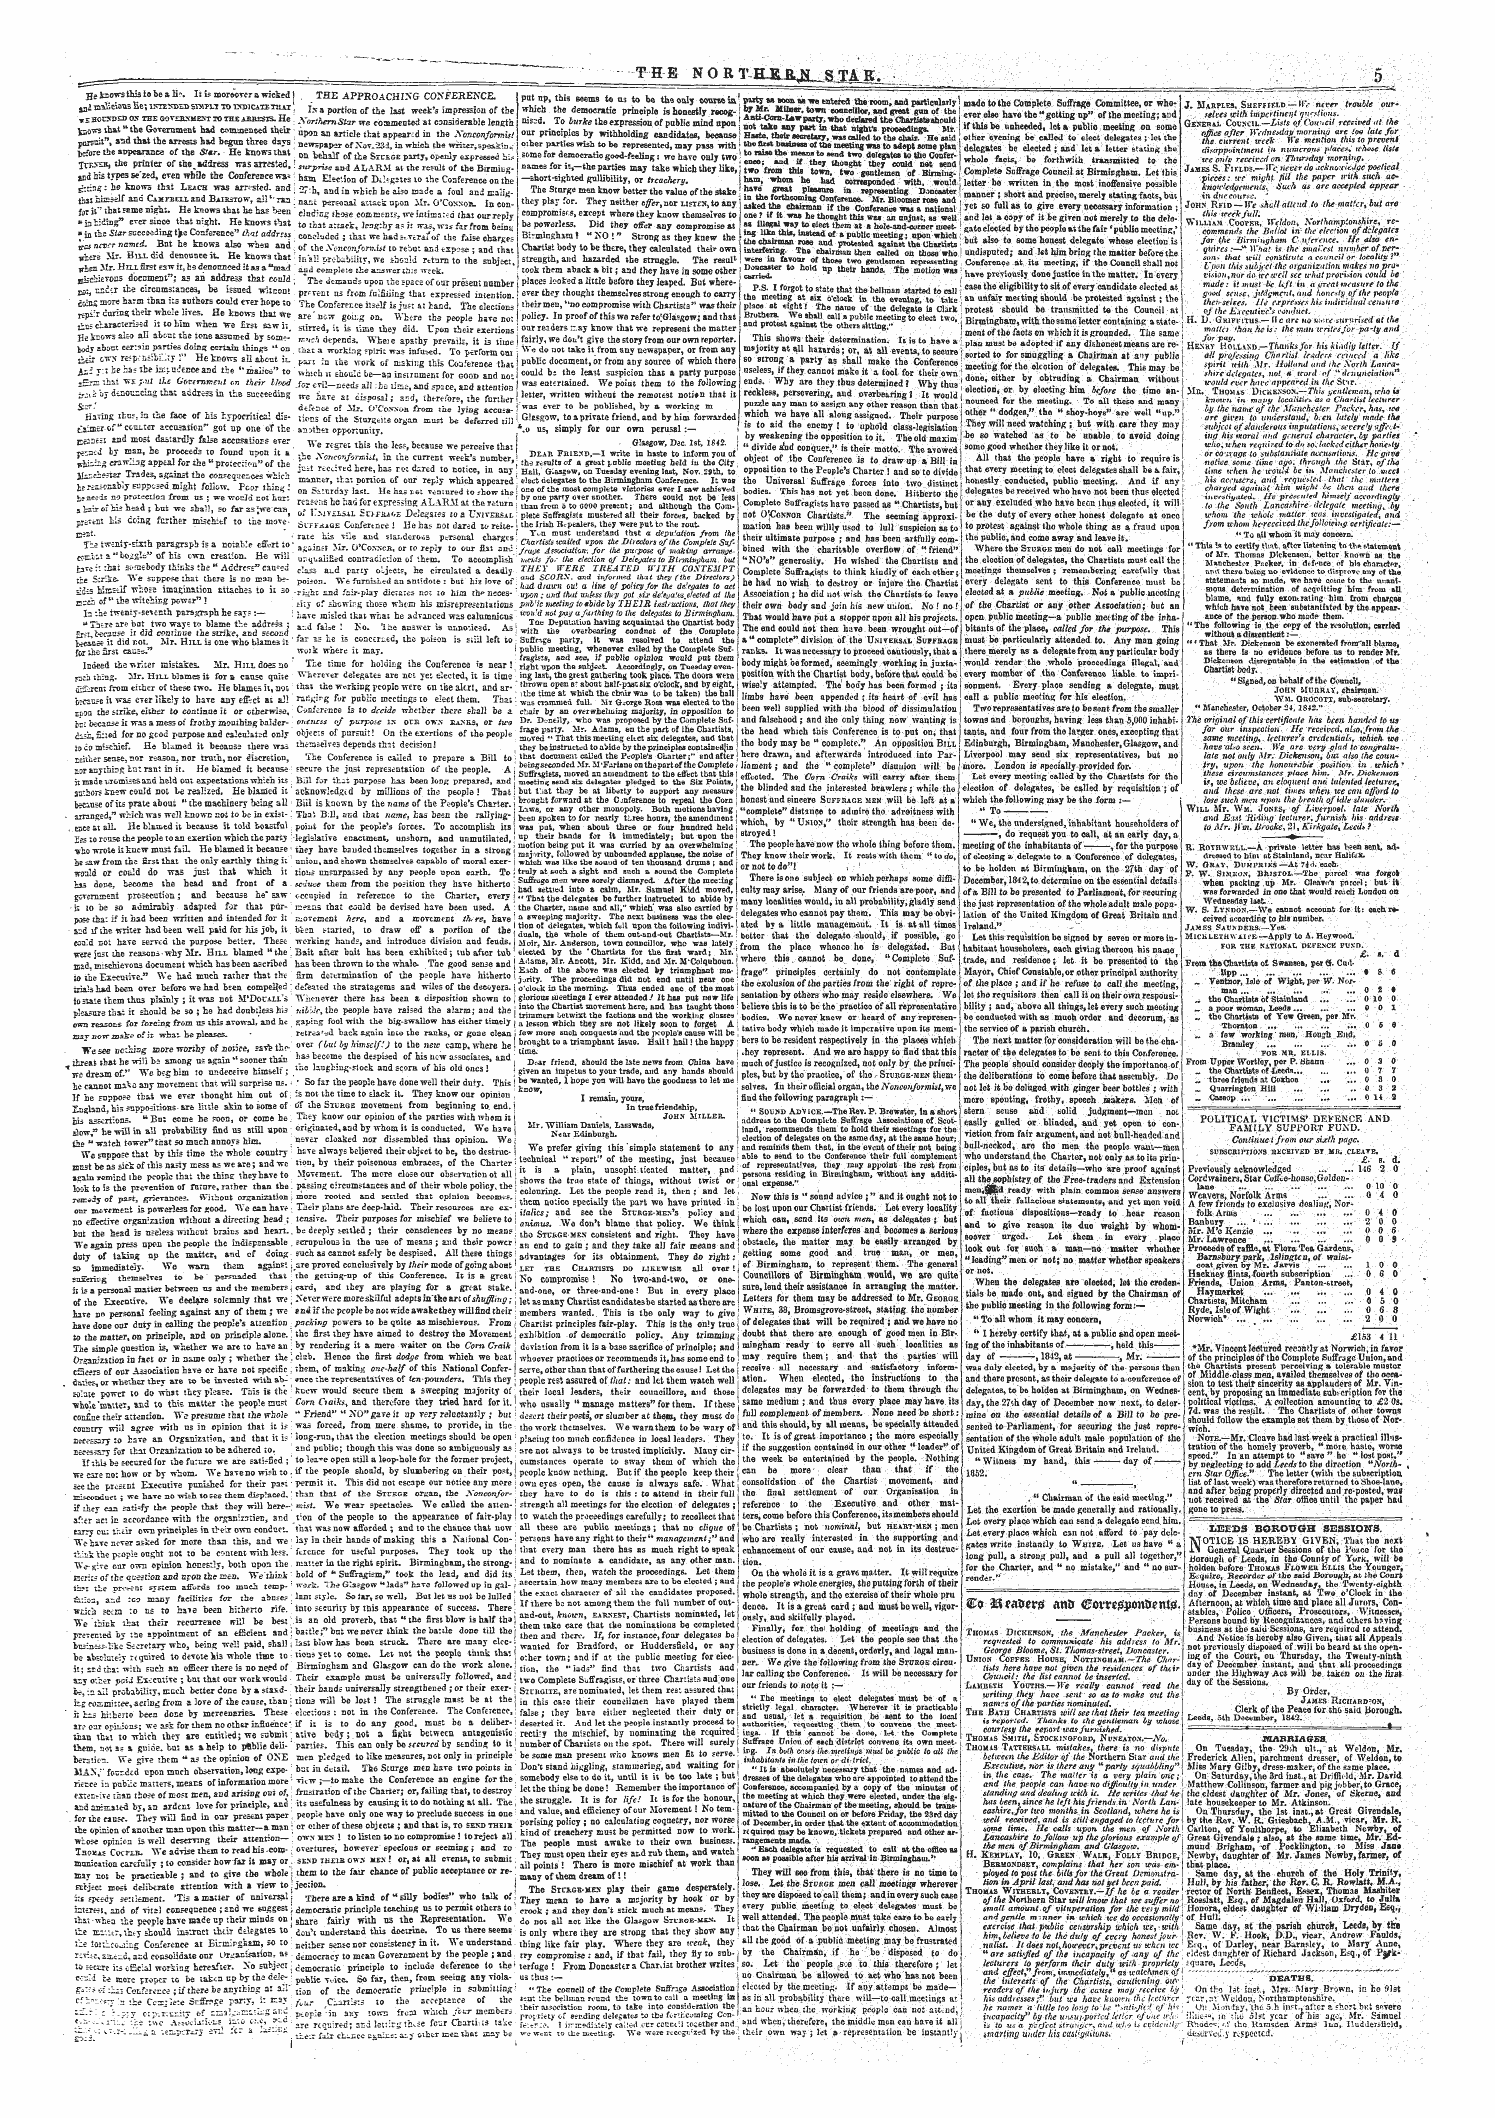 Northern Star (1837-1852): jS F Y, 4th edition - ©0 Mtttotv8 Aittr &Lt;C?Ovfc^J)Oulr?Jttj3i